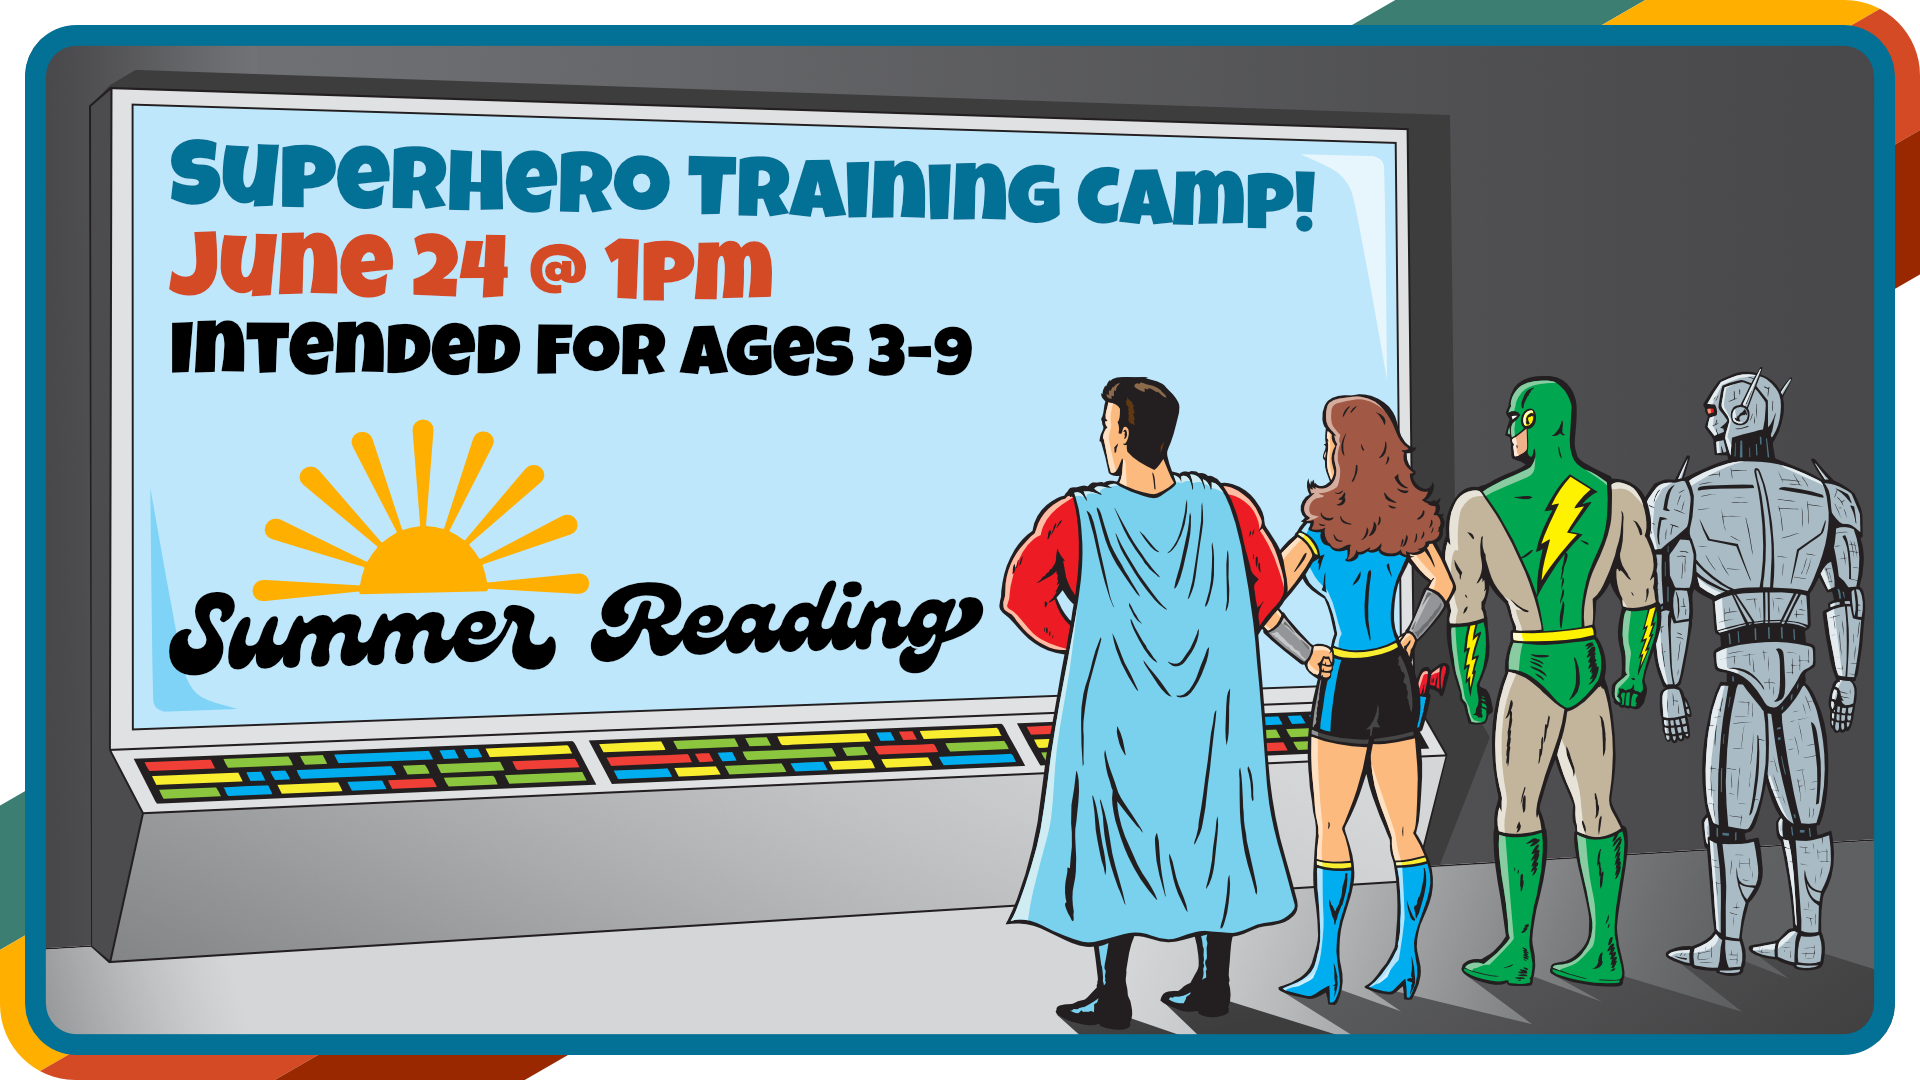 Summer Reading Superhero Training Camp for kids 3-9, 1-3pm June 24th